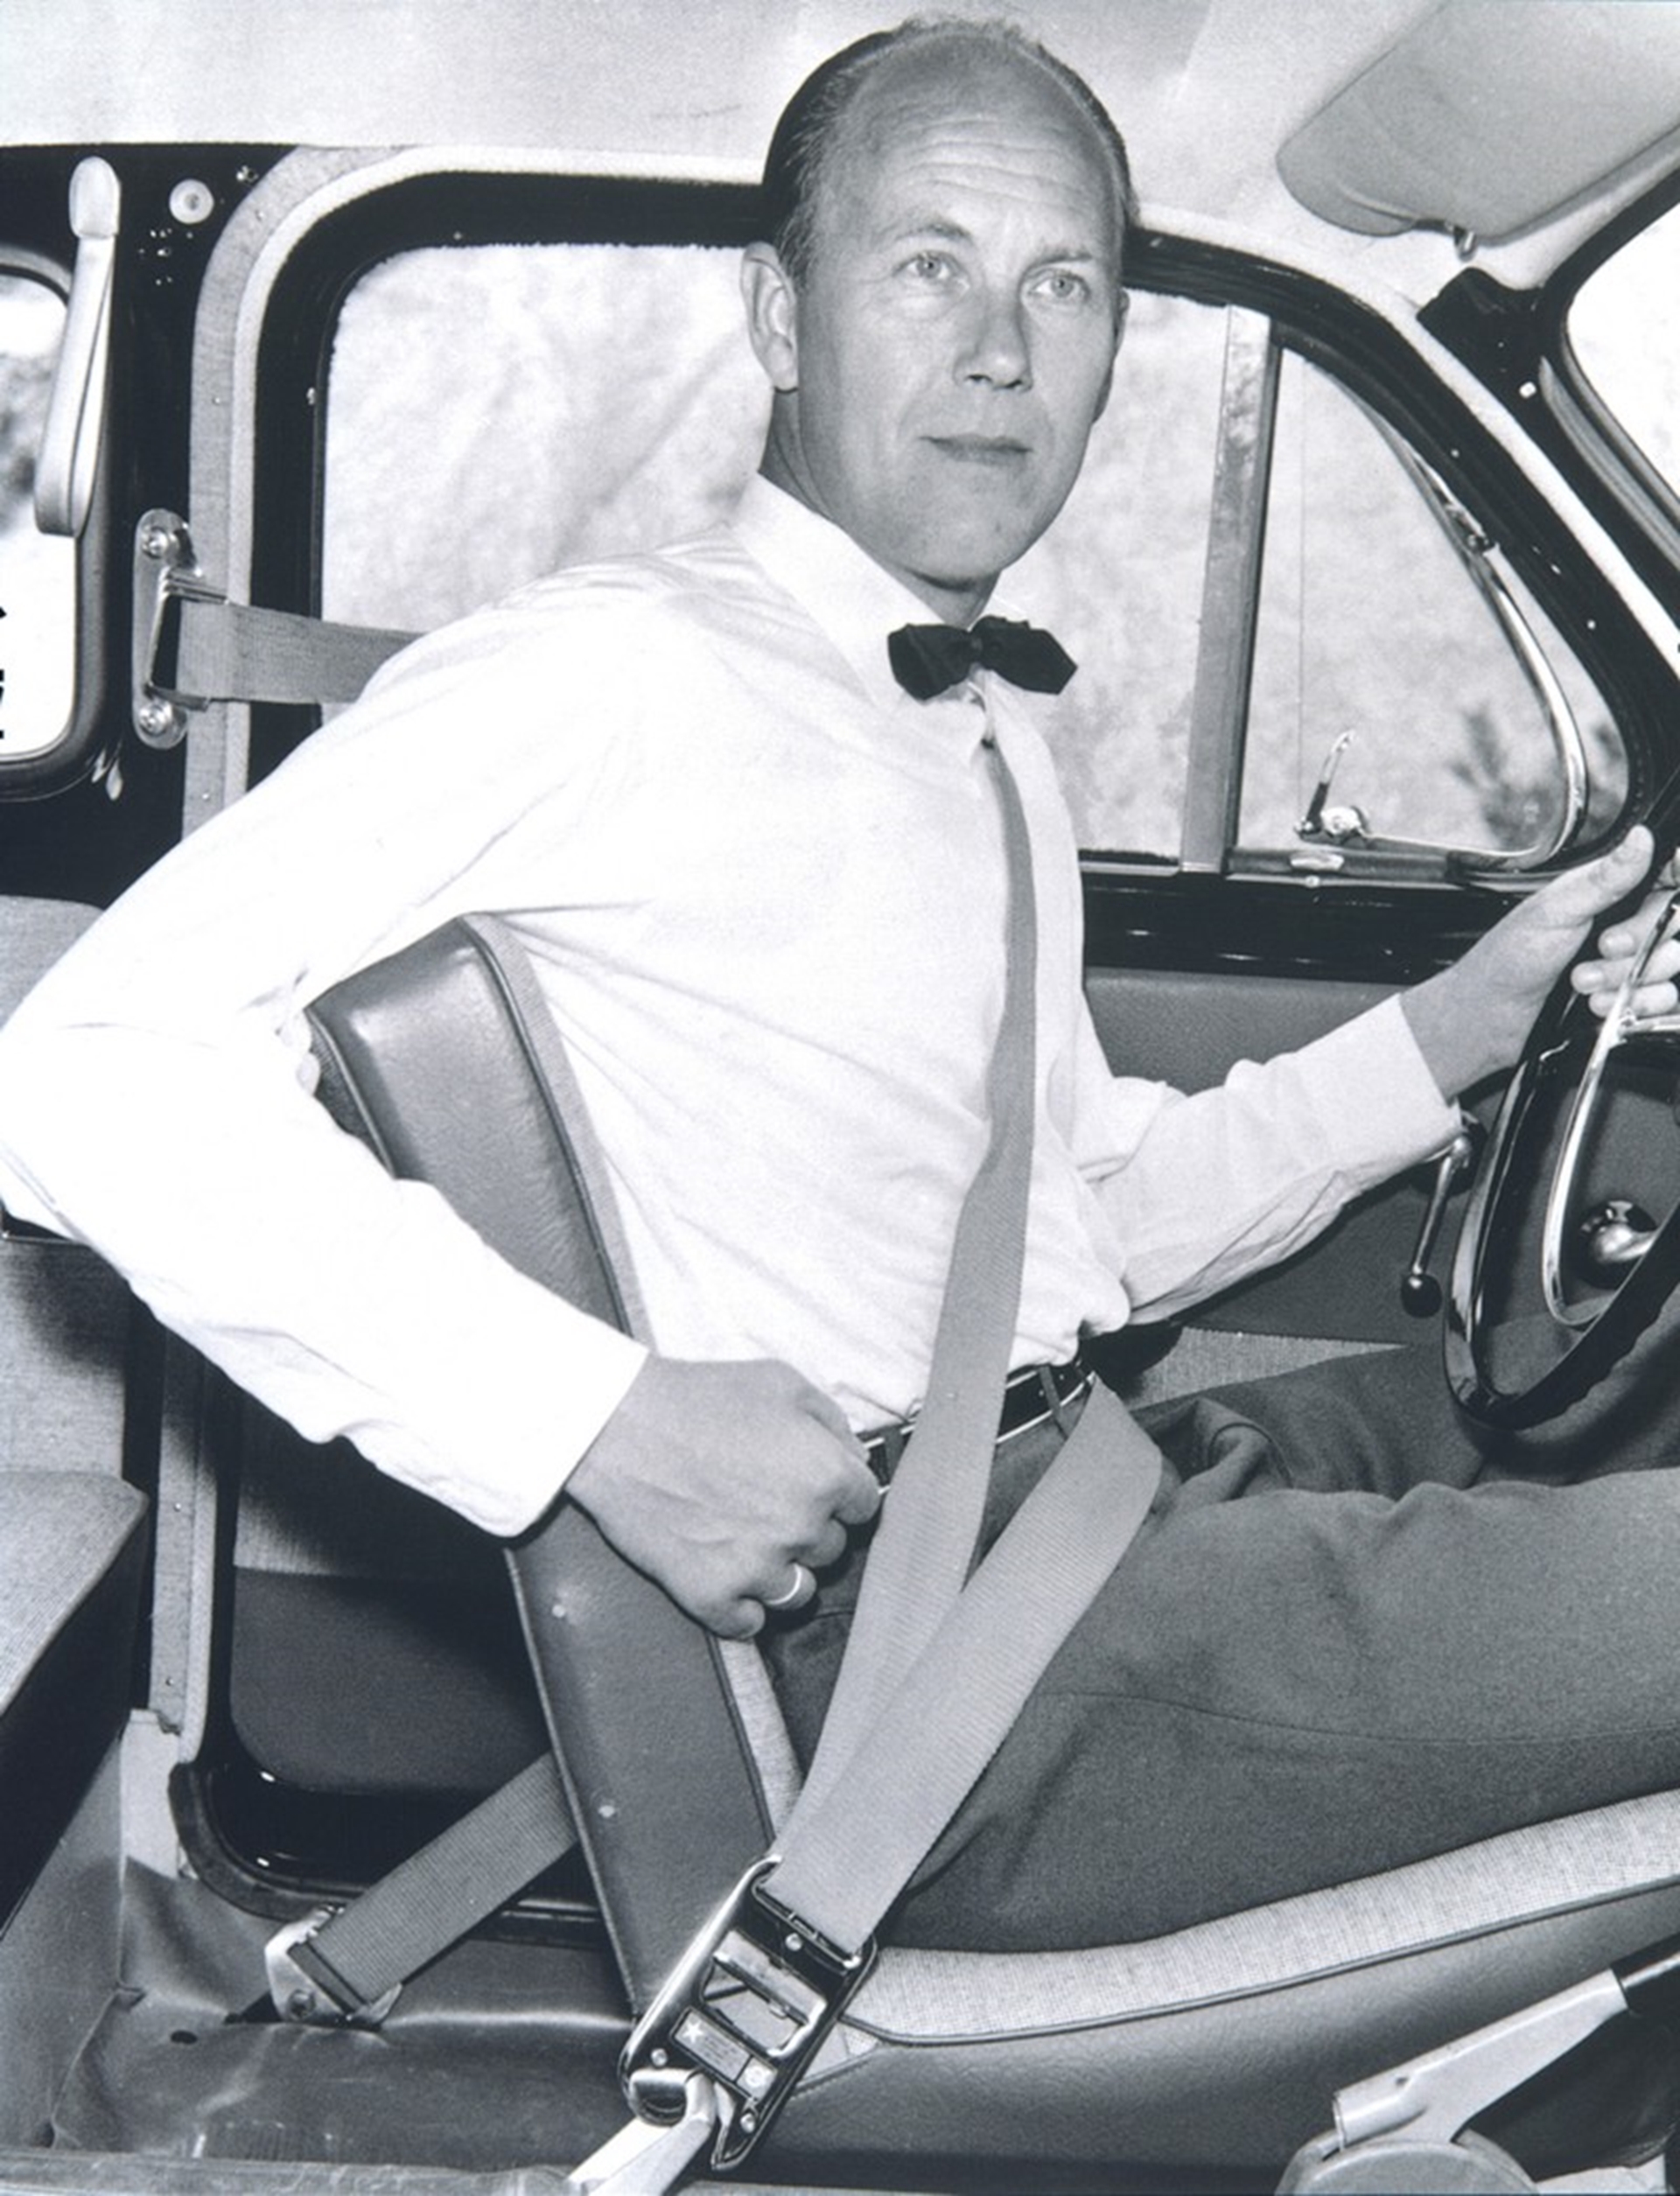 Nils Bohlin wearing his seatbelt.